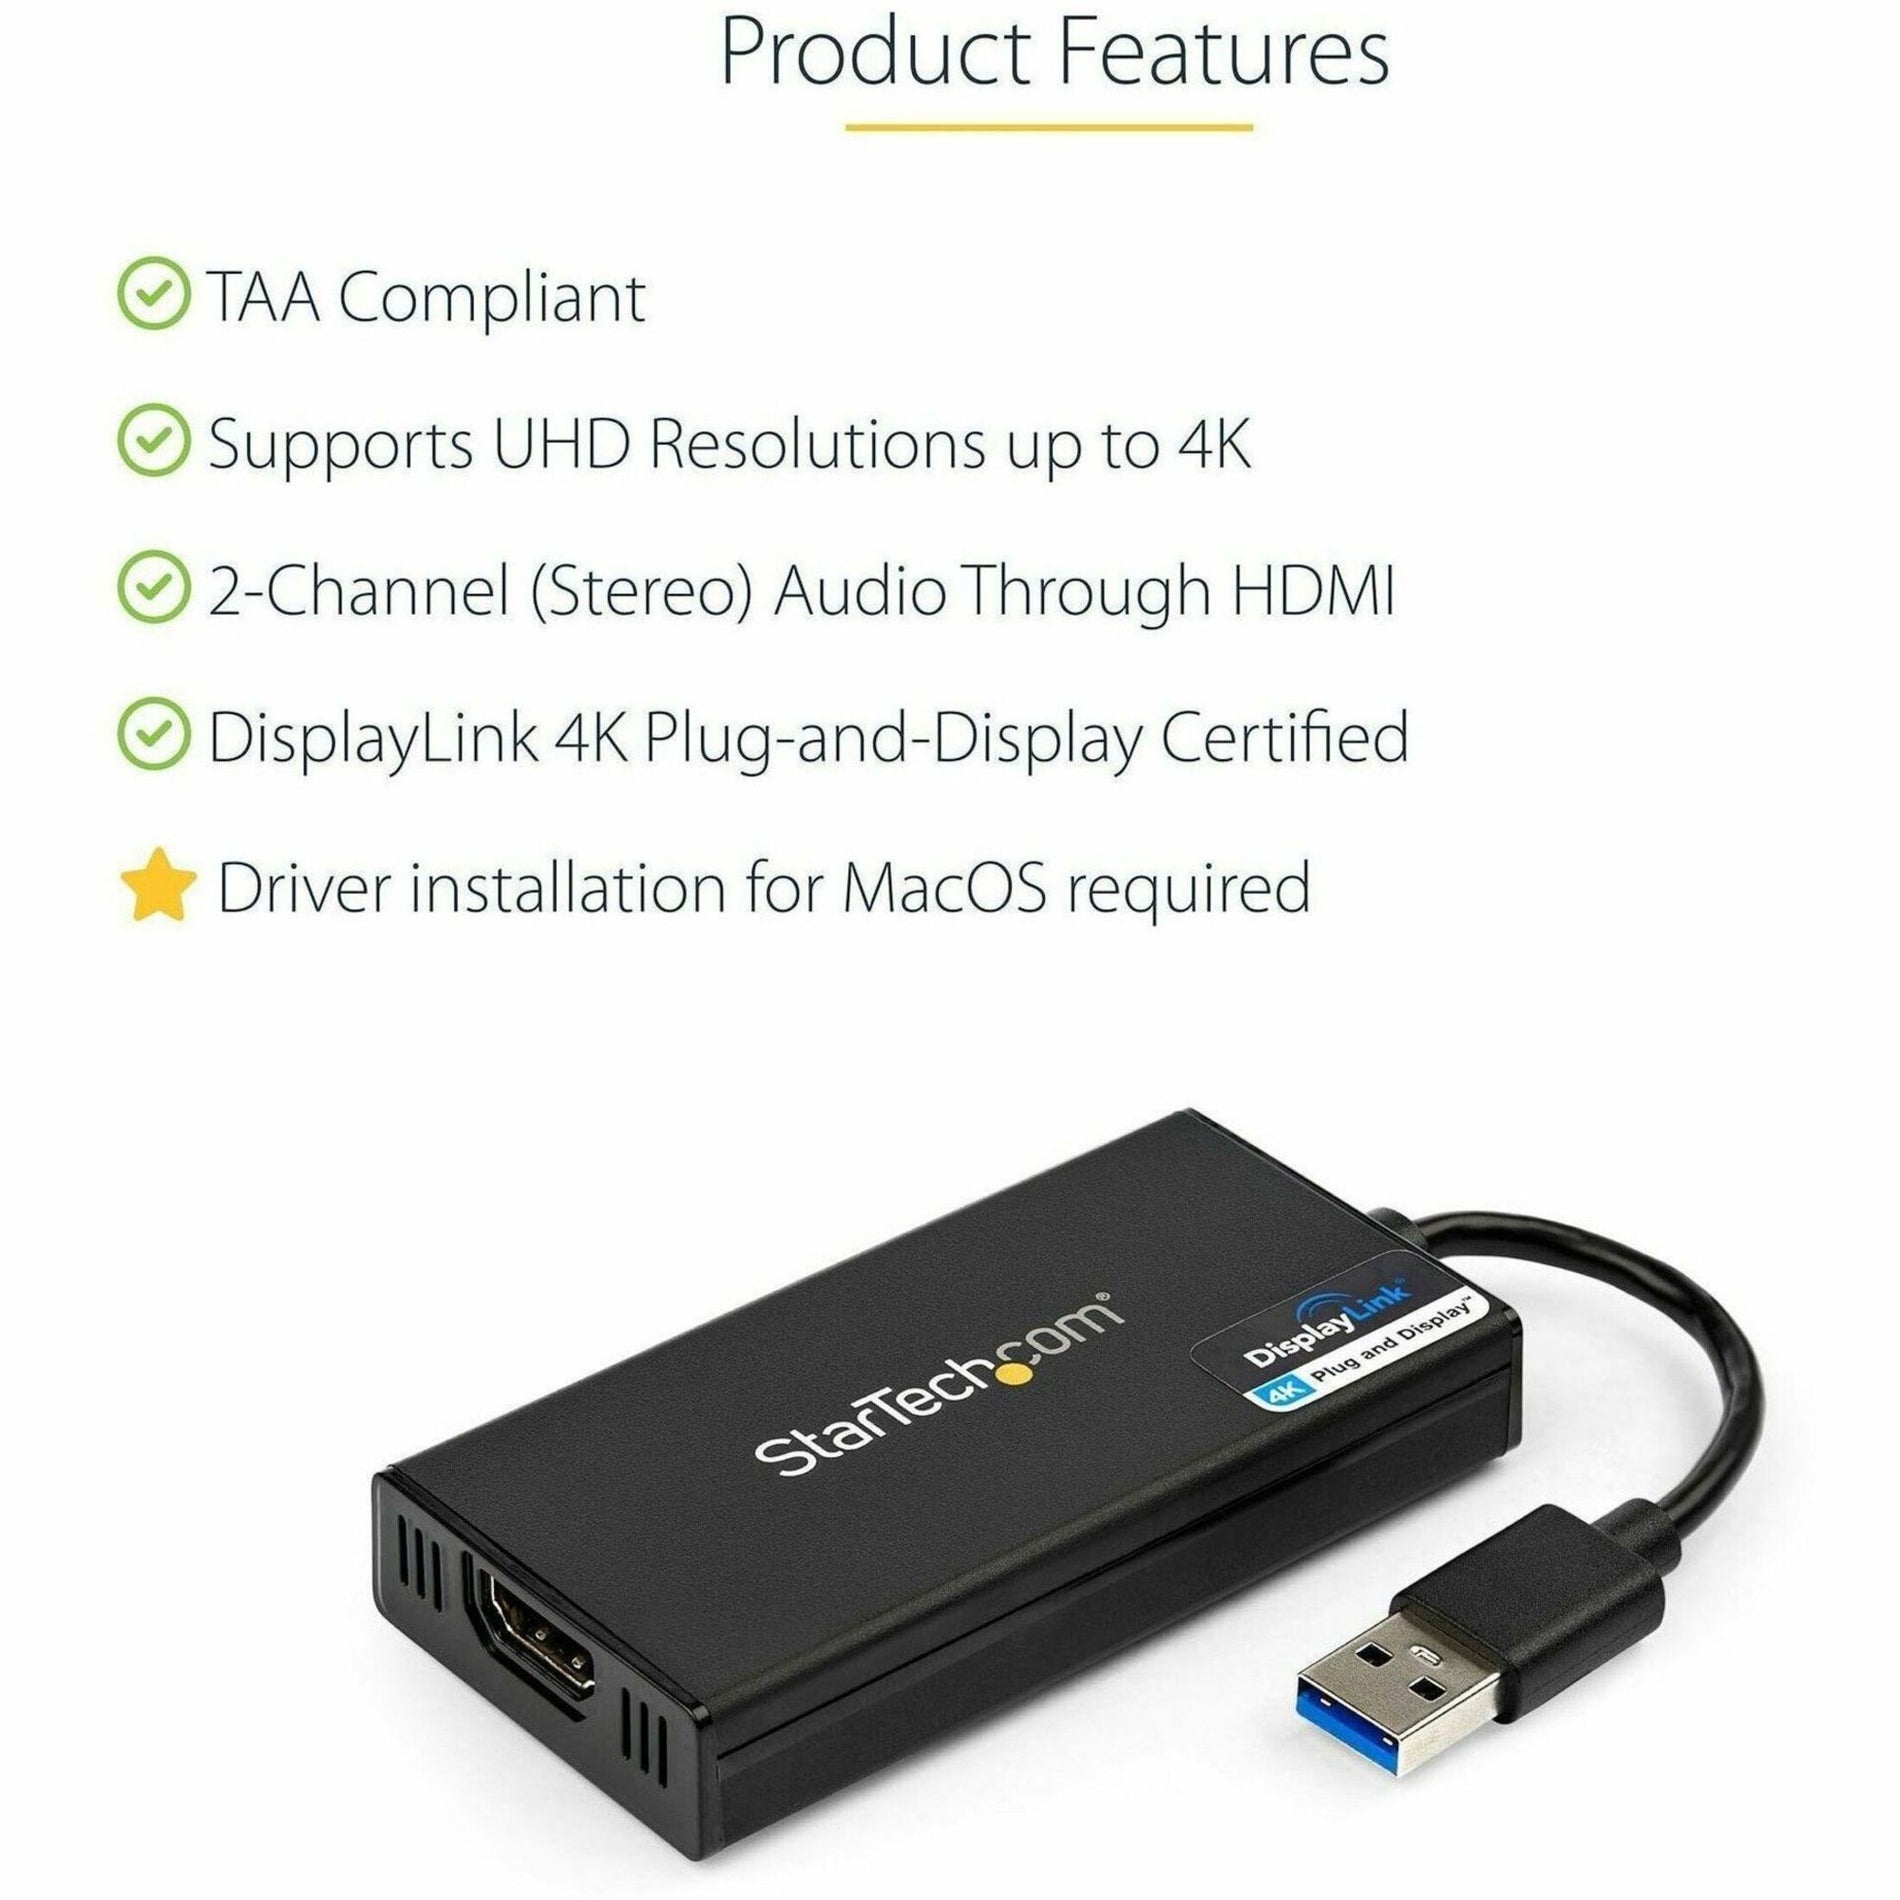 StarTech.com USB32HD4K 4K USB Video Card - USB 3.0 to HDMI Adapter, External Video Card